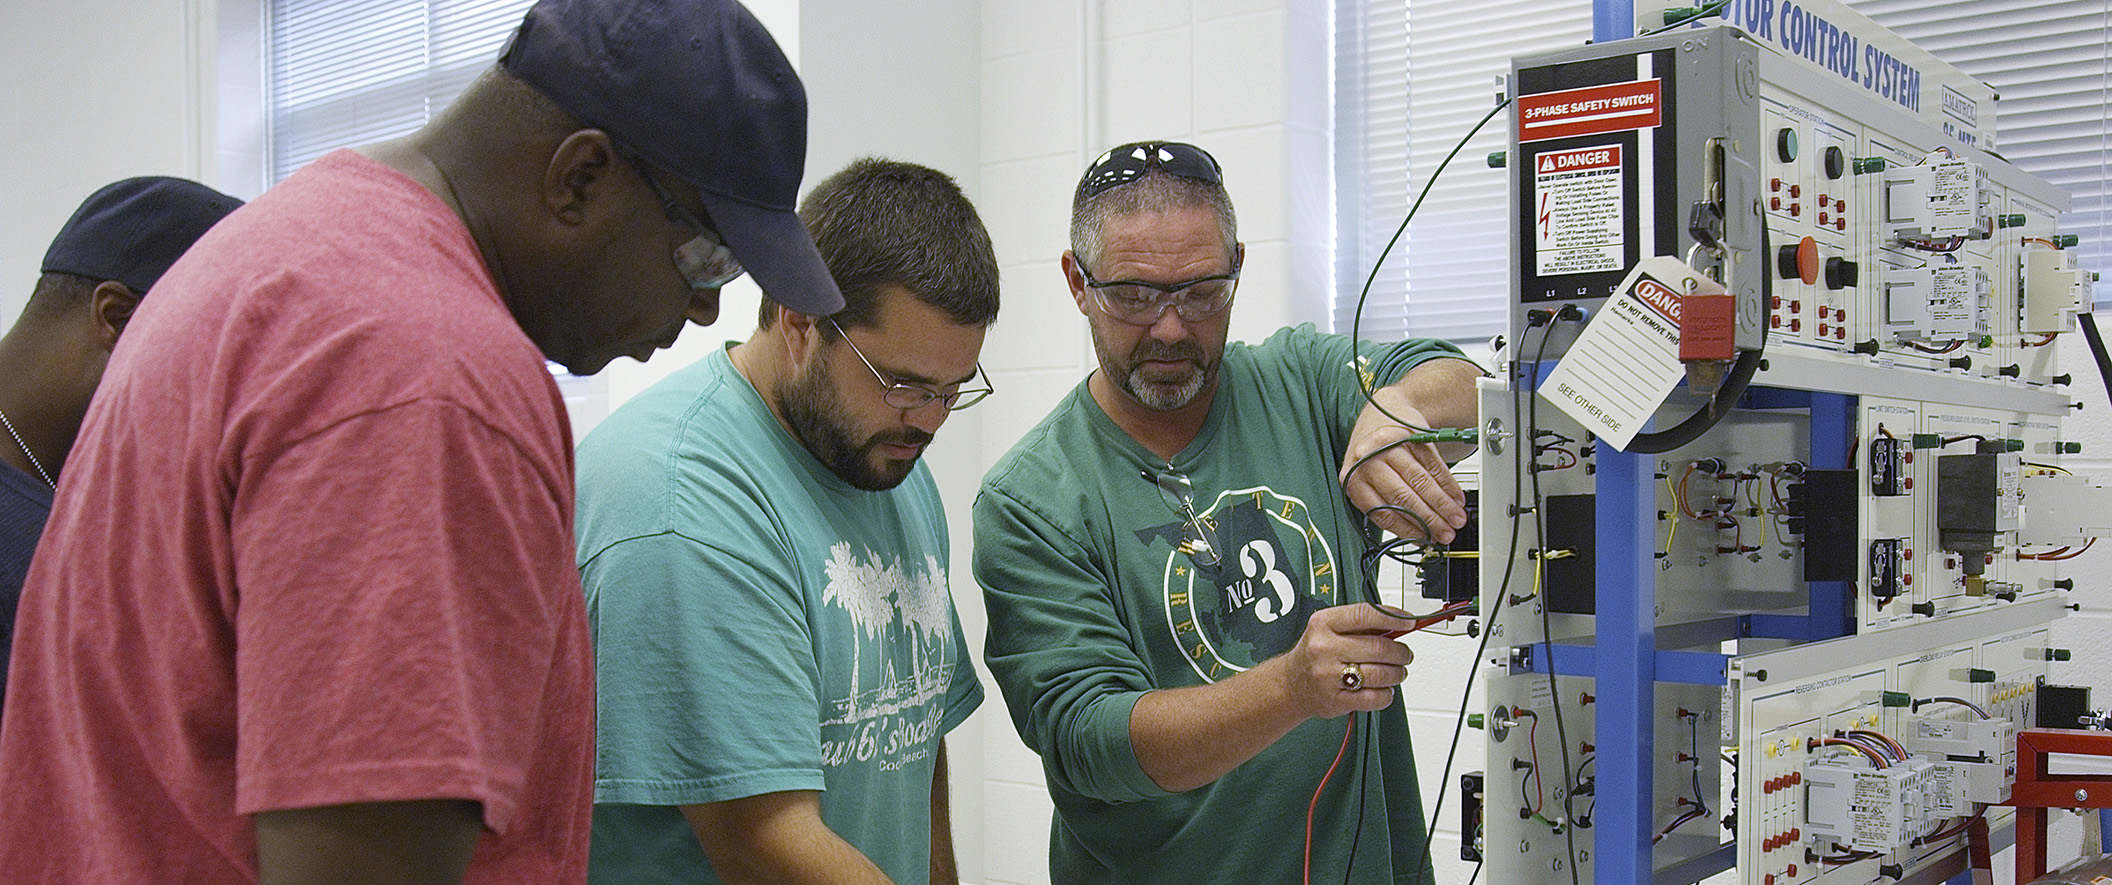 three men inspecting electrical equipment